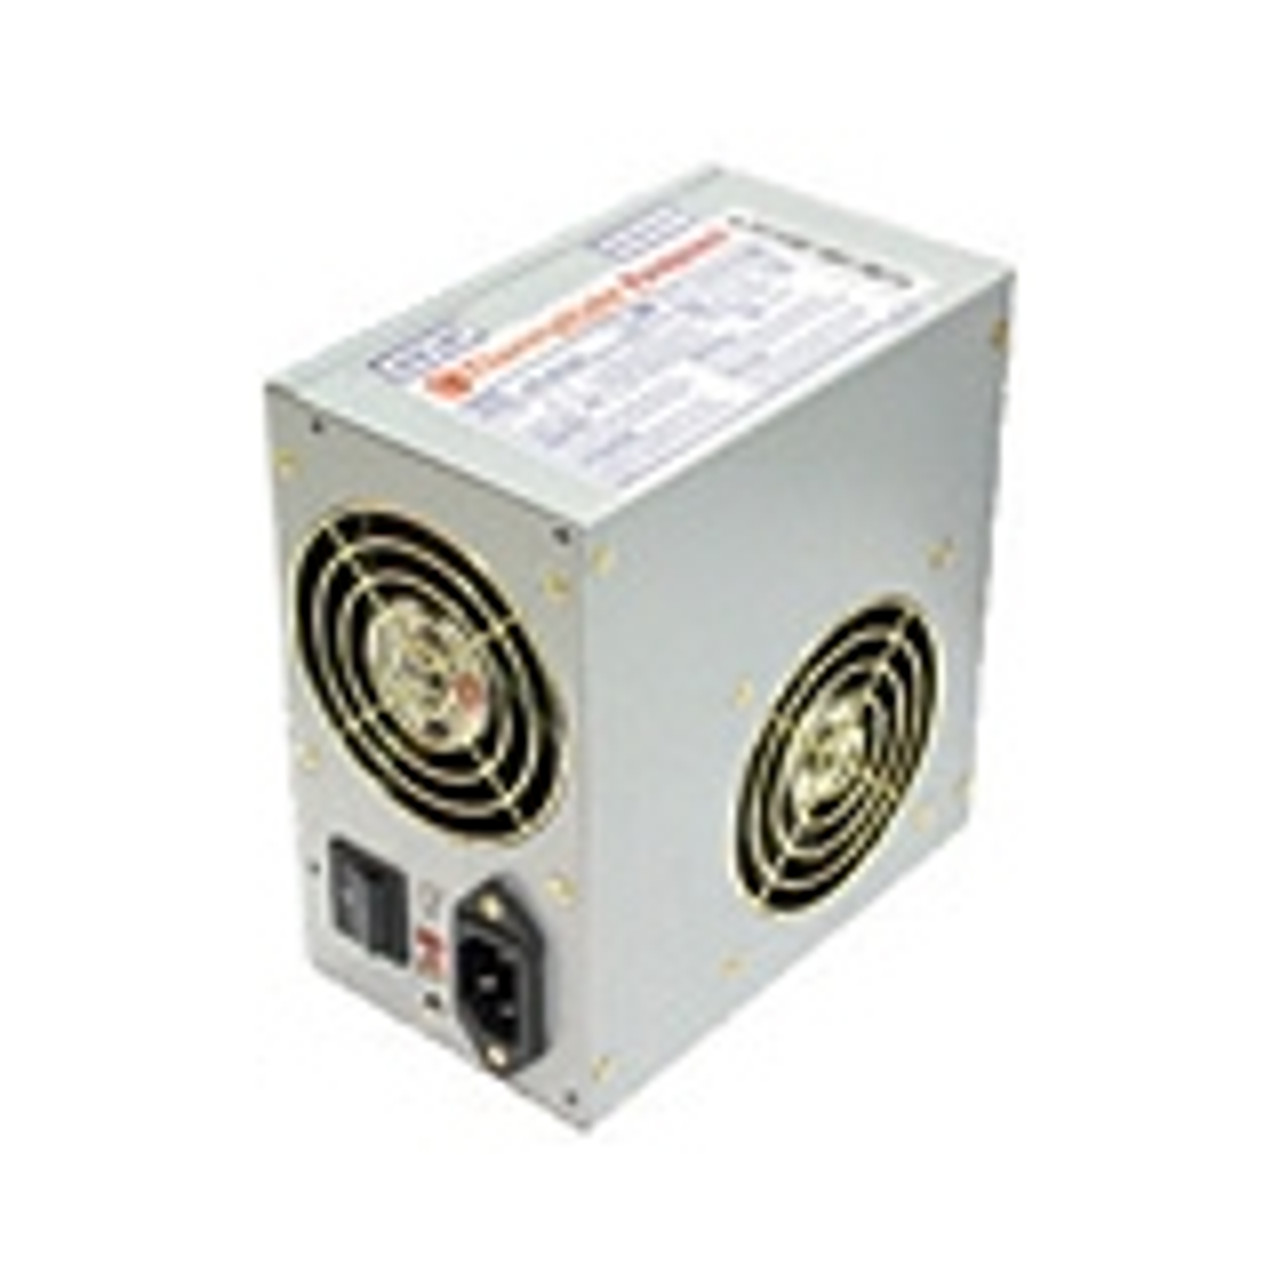 W0009R Thermaltake PurePower 420-Watts ATX Power Supply